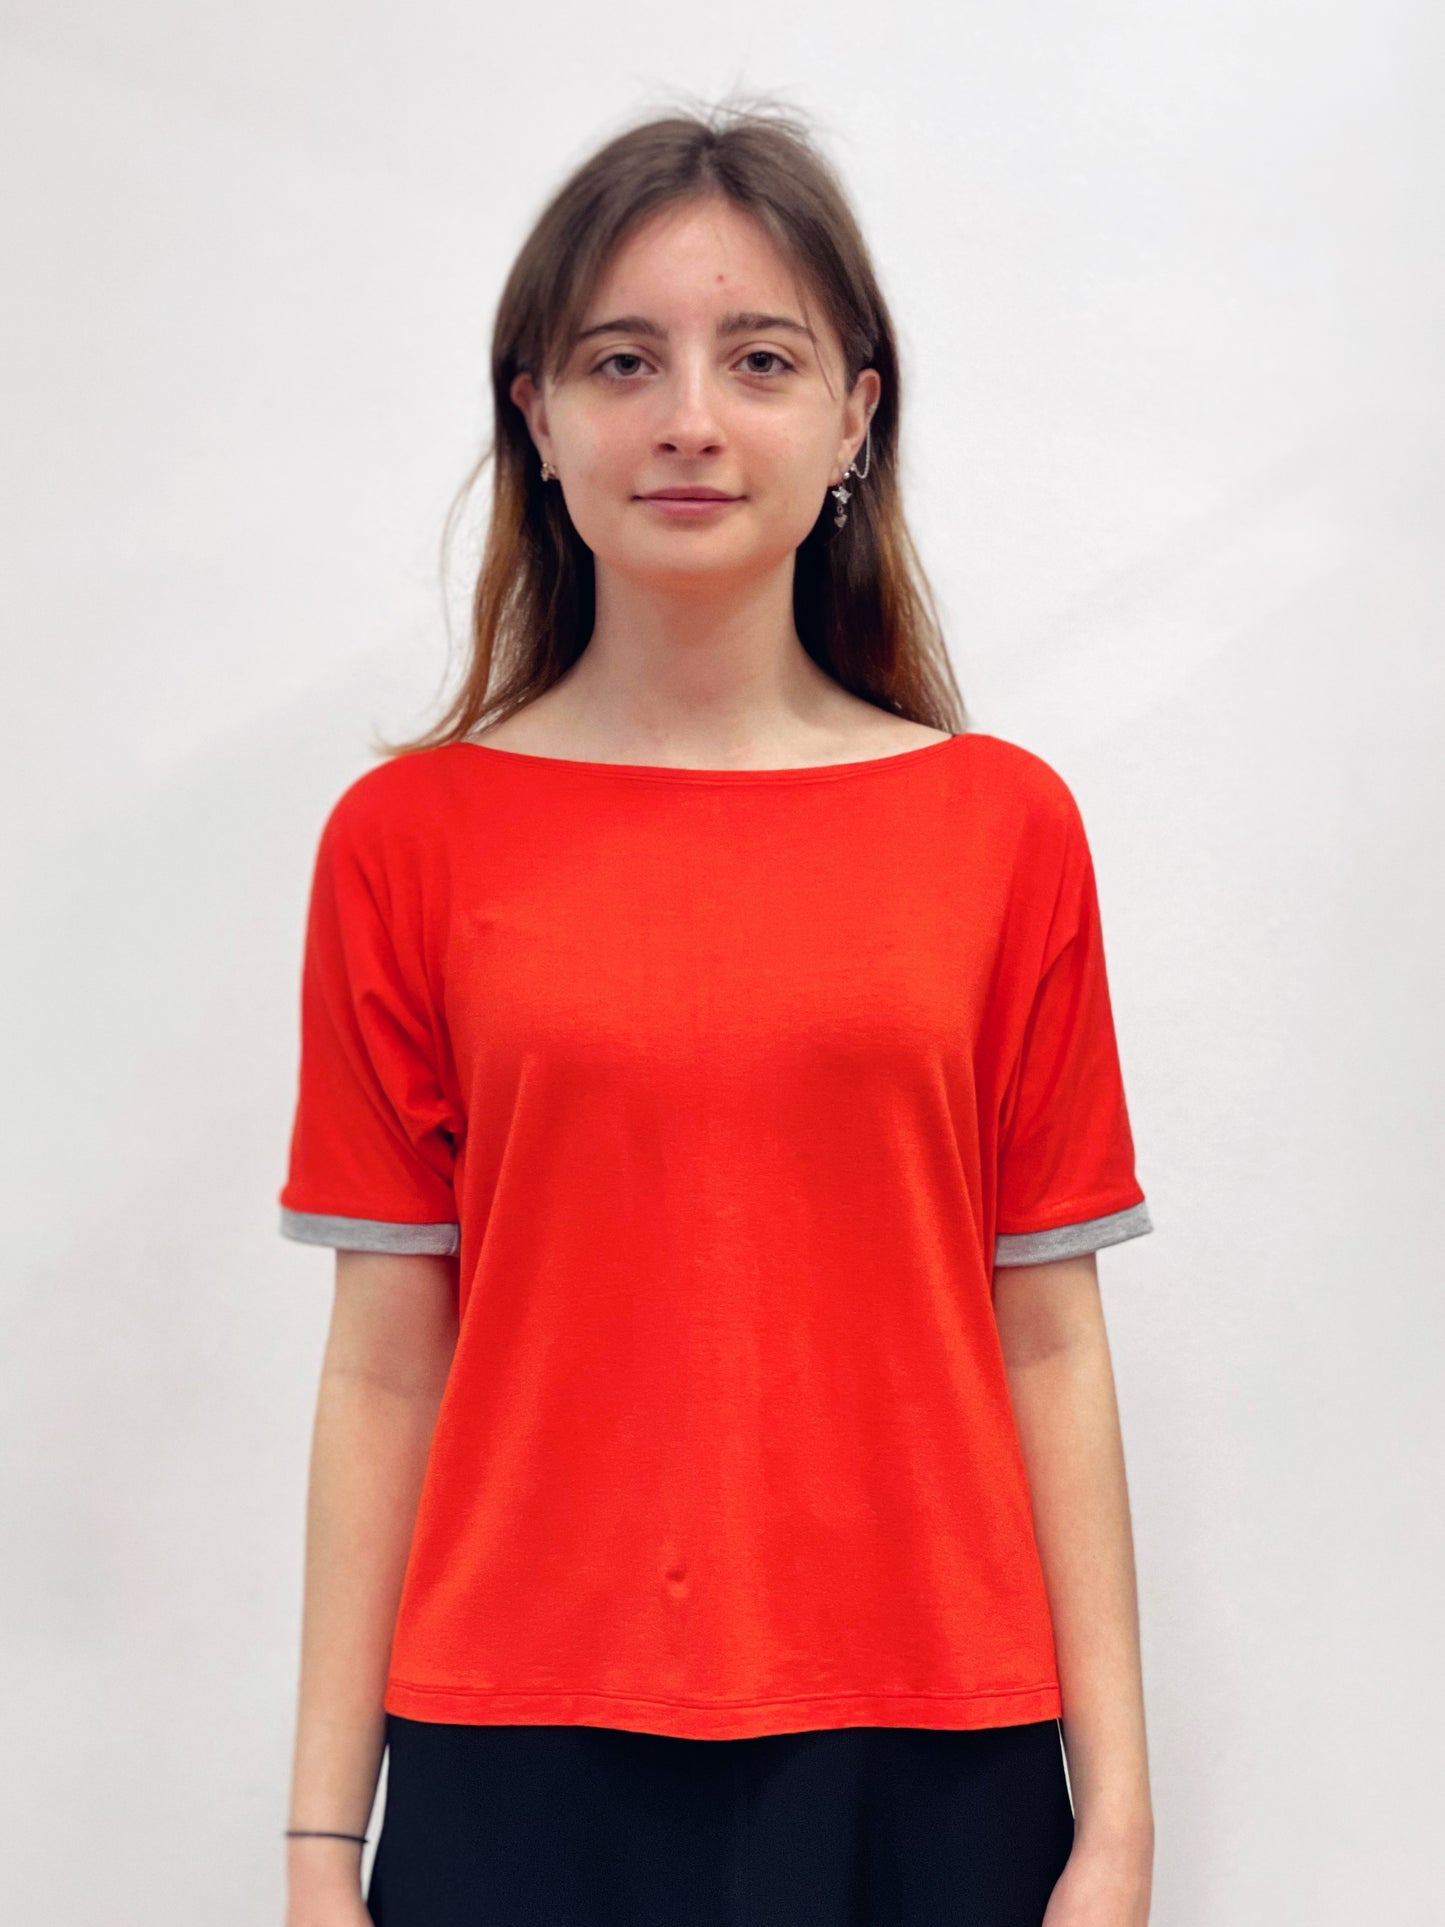 Camiseta manga corta naranja